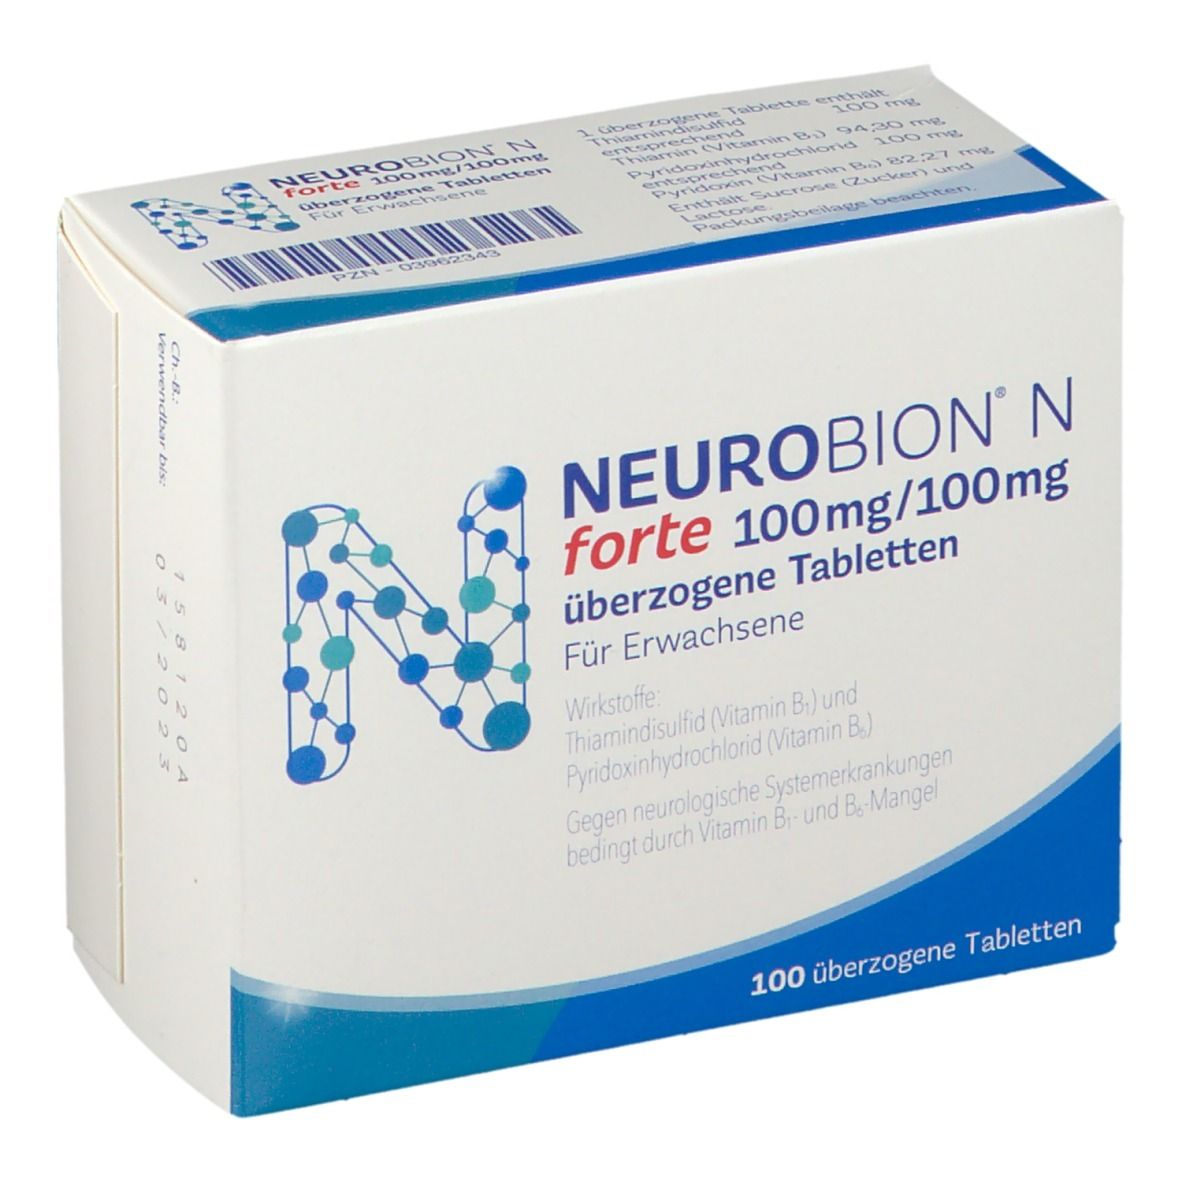 Neurobion® N Forte